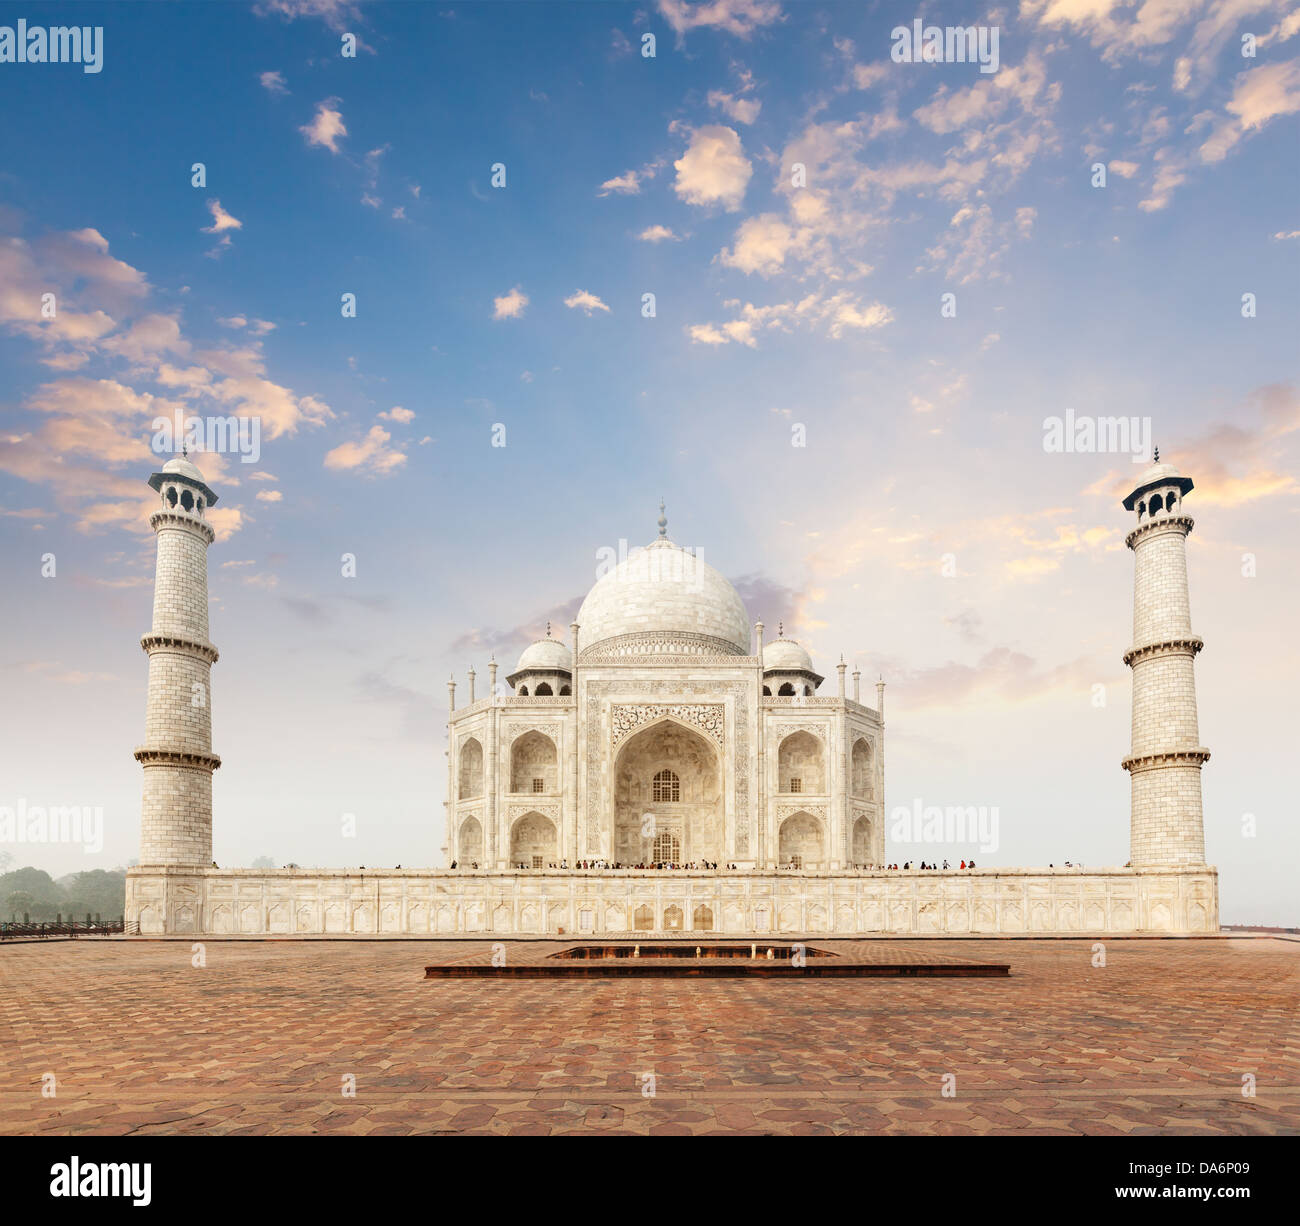 Taj Mahal. Symbole indien - Inde billet d'arrière-plan. Agra, Inde Banque D'Images